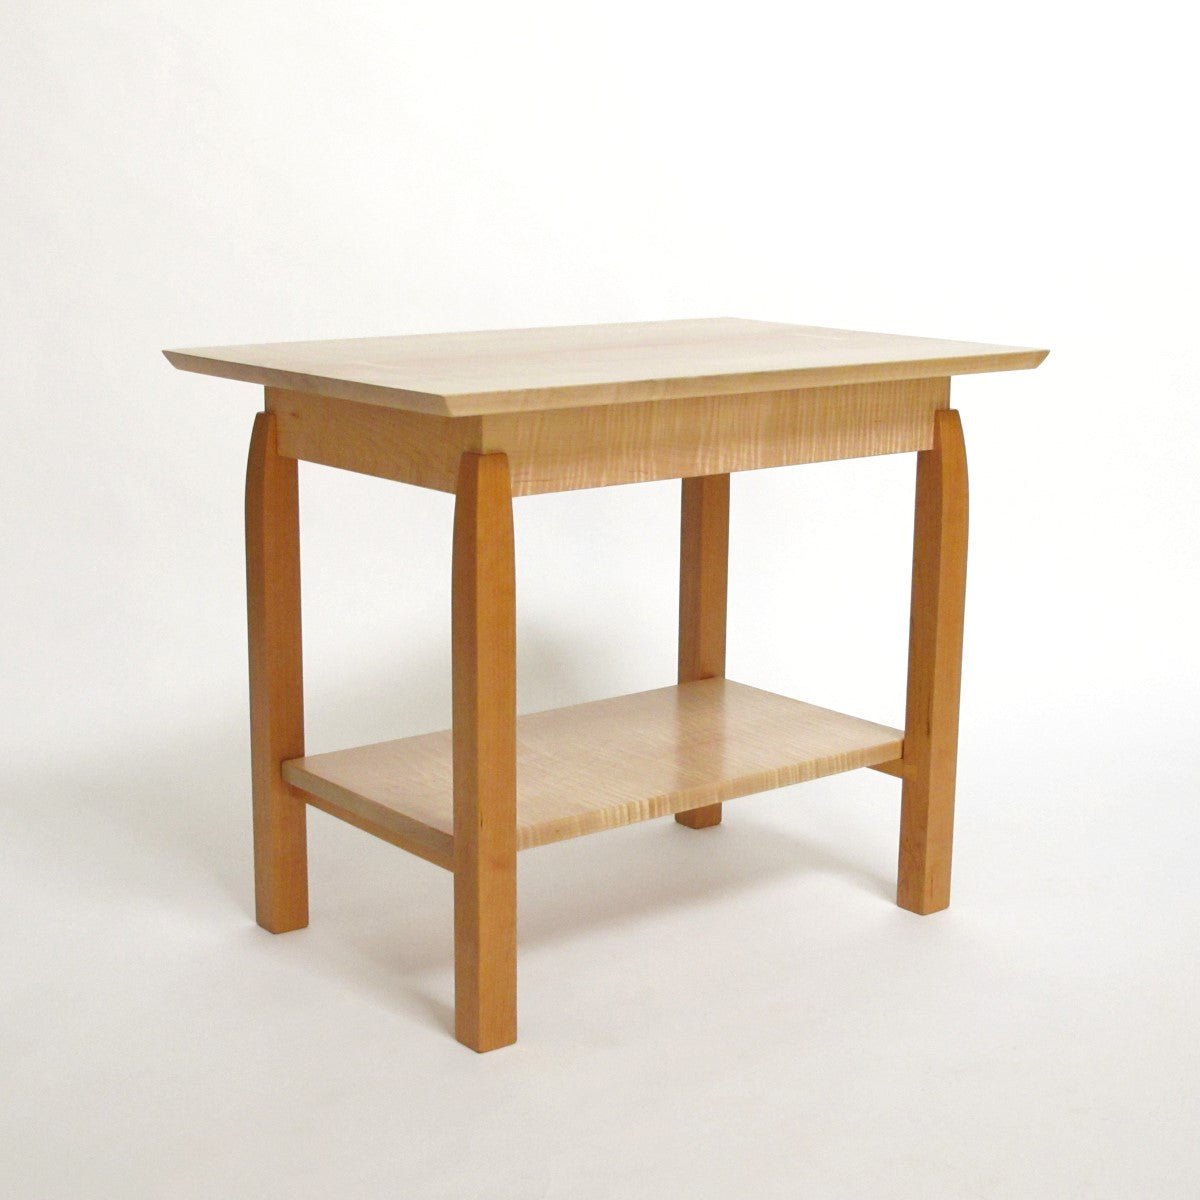 A unique modern side table, handmade by Mokuzai Furniture.